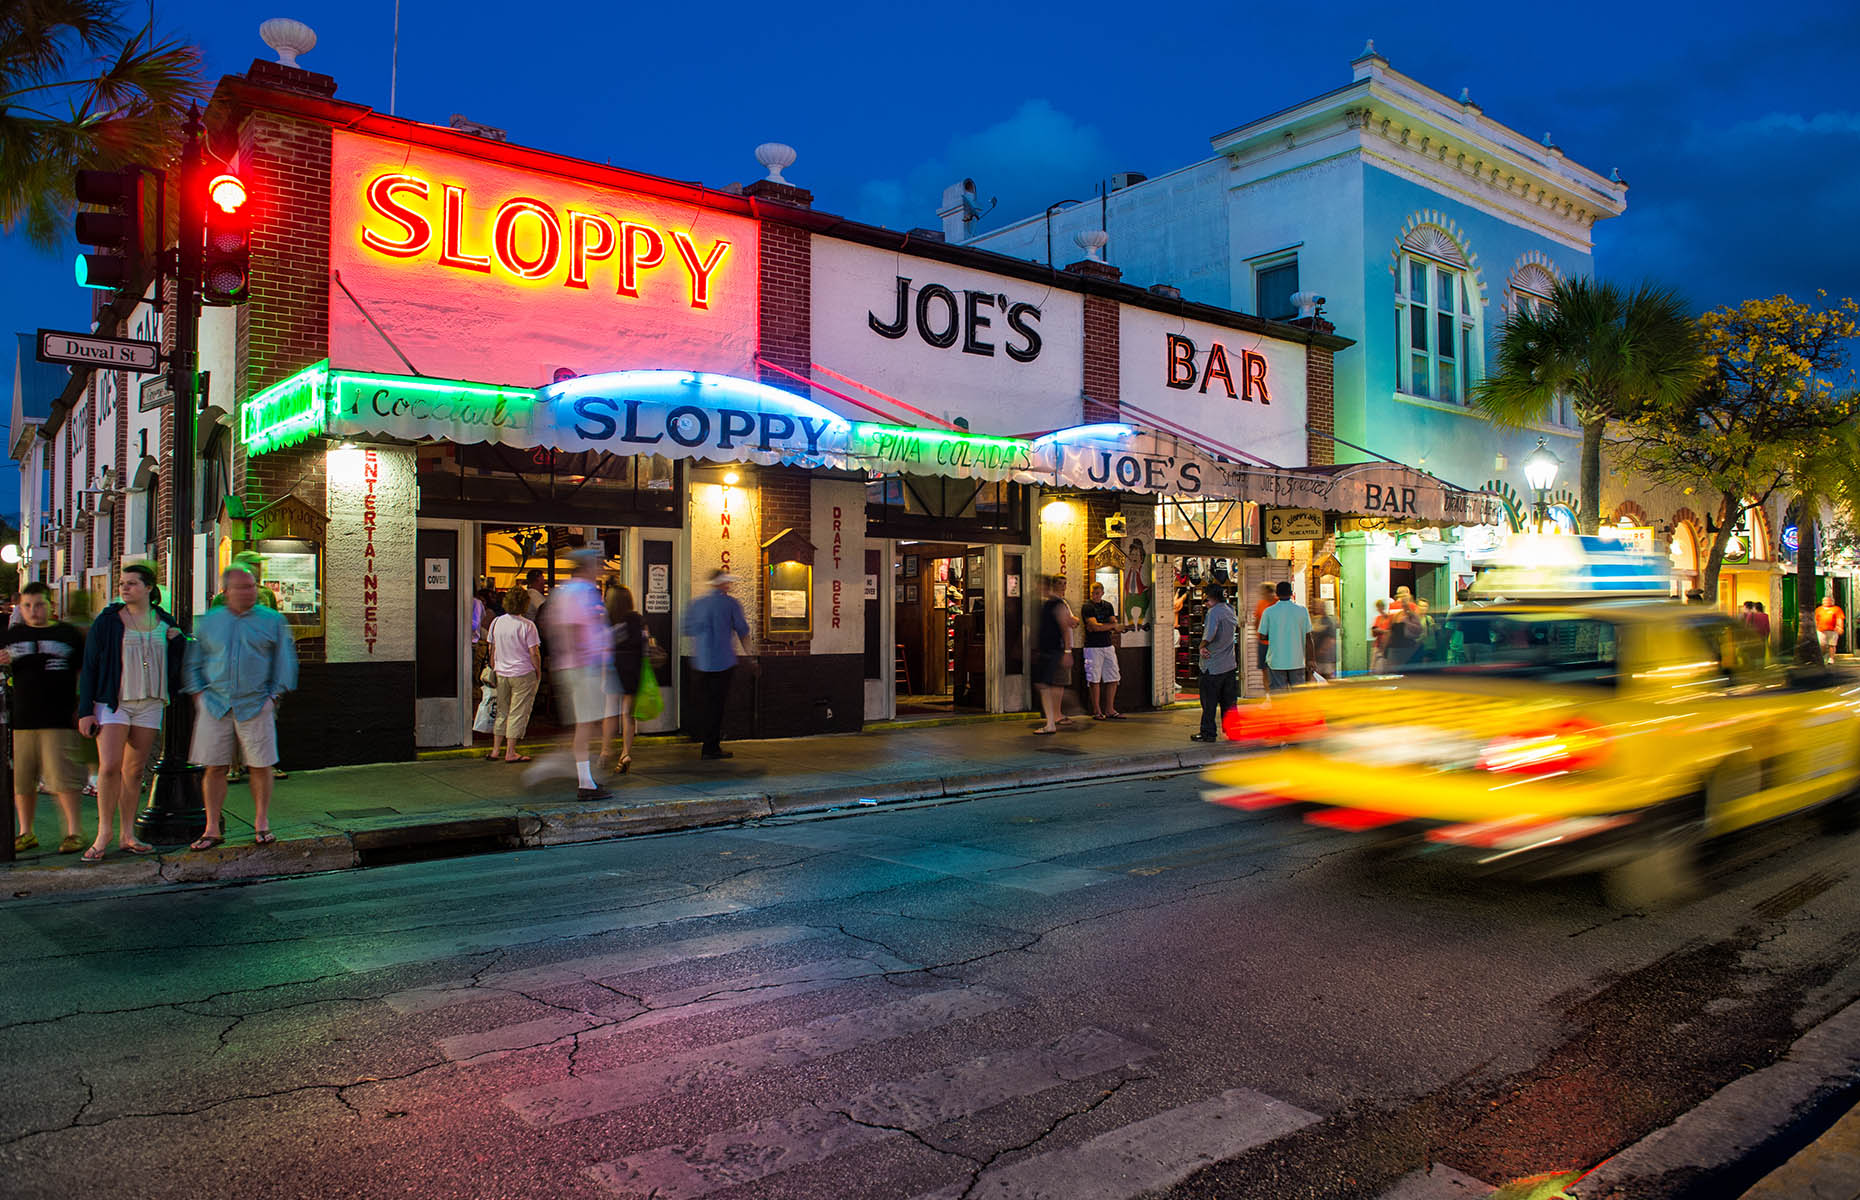 Sloppy Joes on Duval Street (Image: Daniel Korzeniewski/Shutterstock)